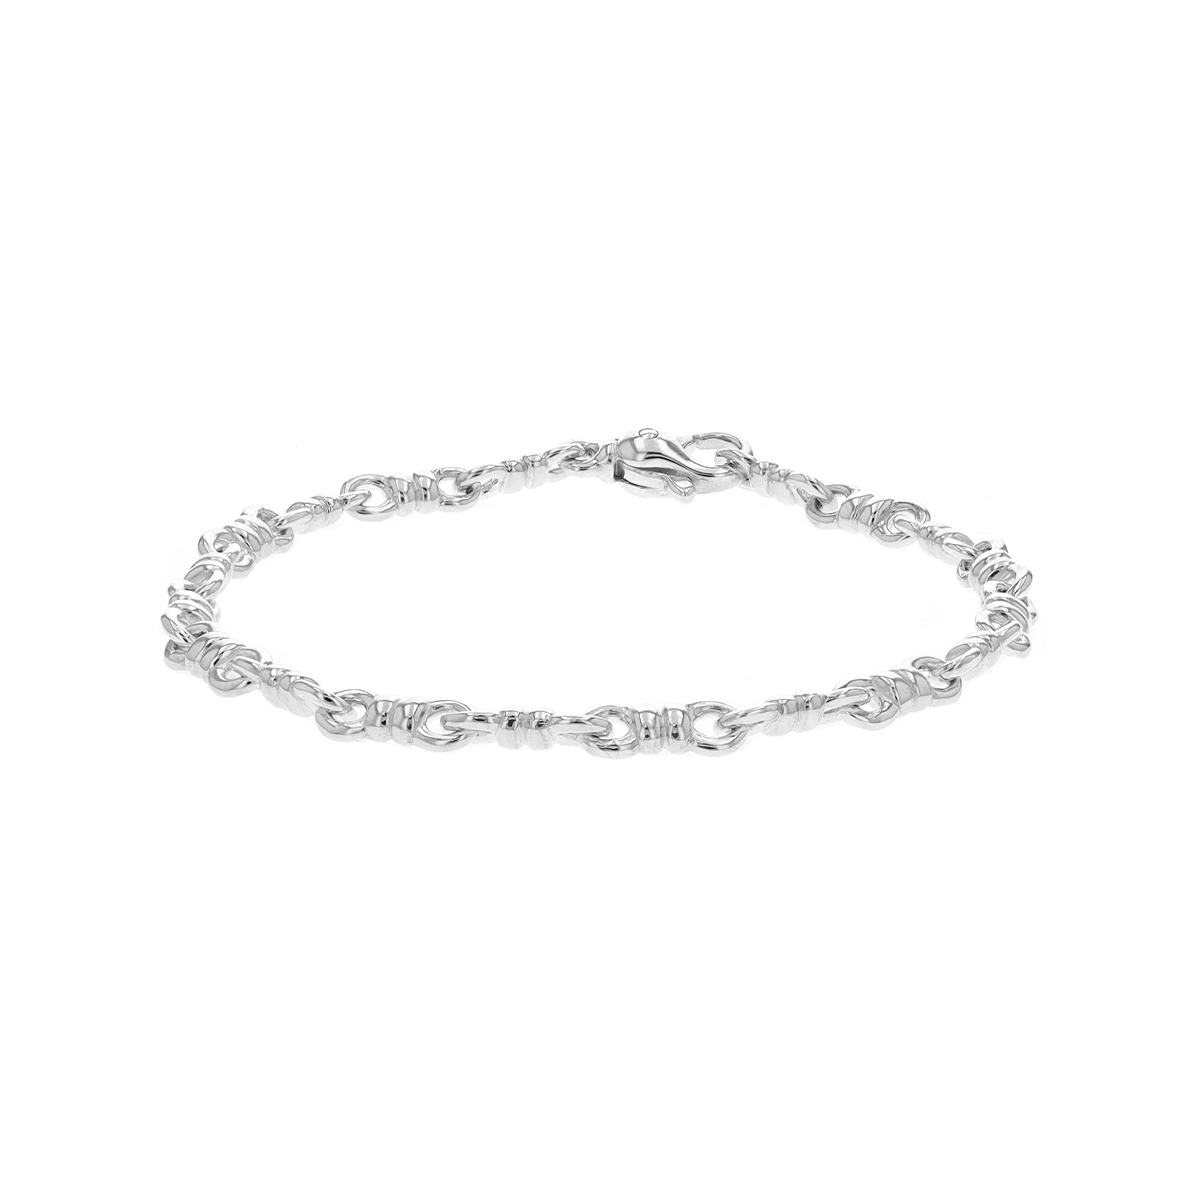 Sterling Silver Small Link Bracelet